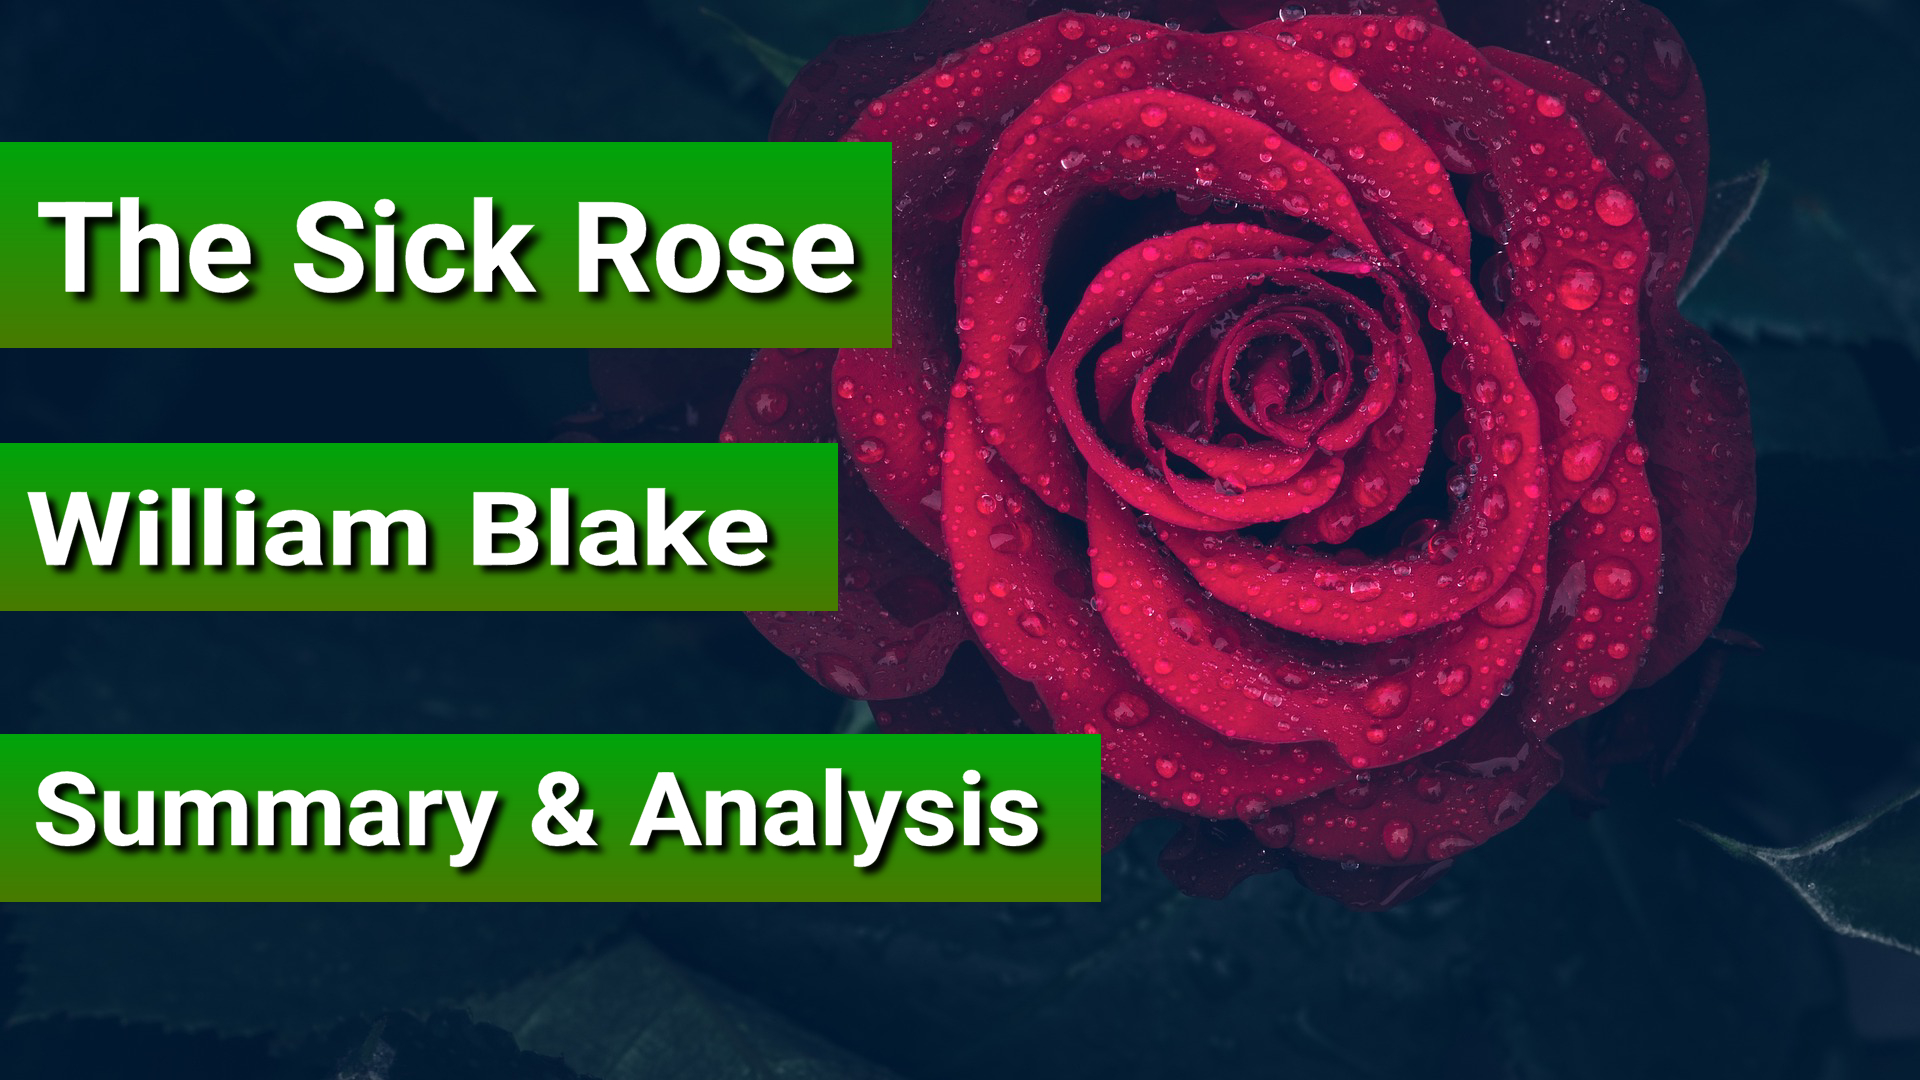 The sick rose